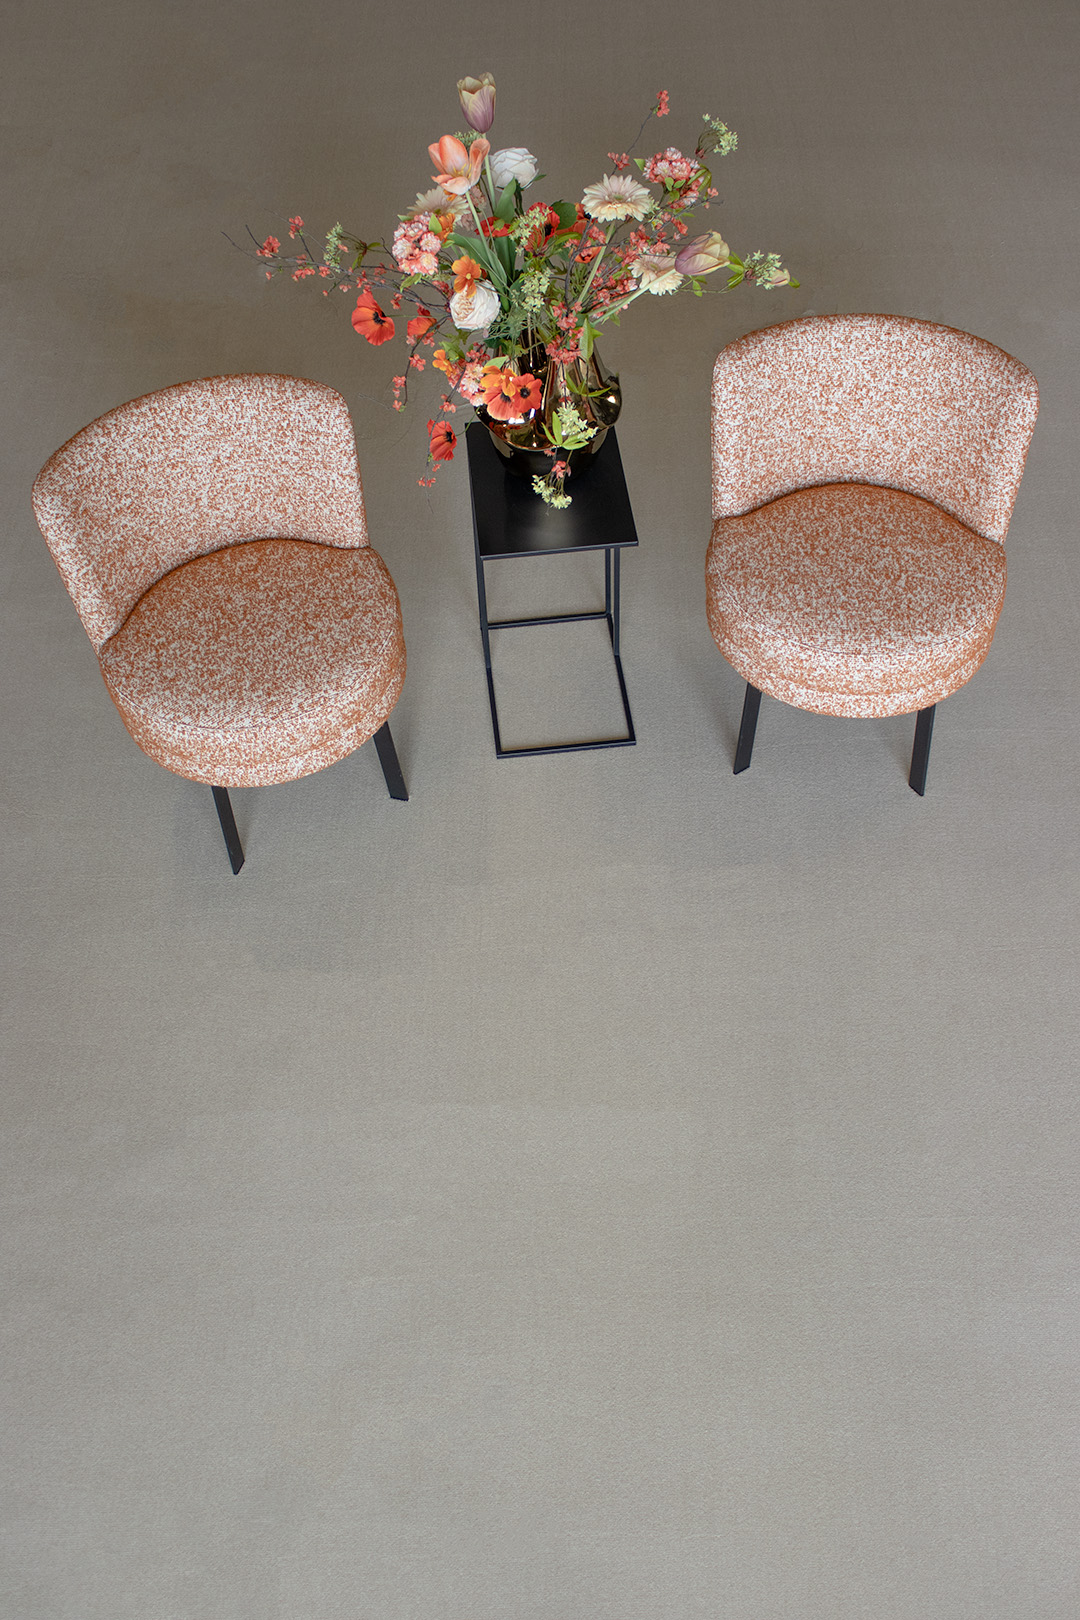 Foto: 152 Interfloor Elite kleur147 sfeerfoto woonkamer fauteuil oranjestoel boeketbloemen